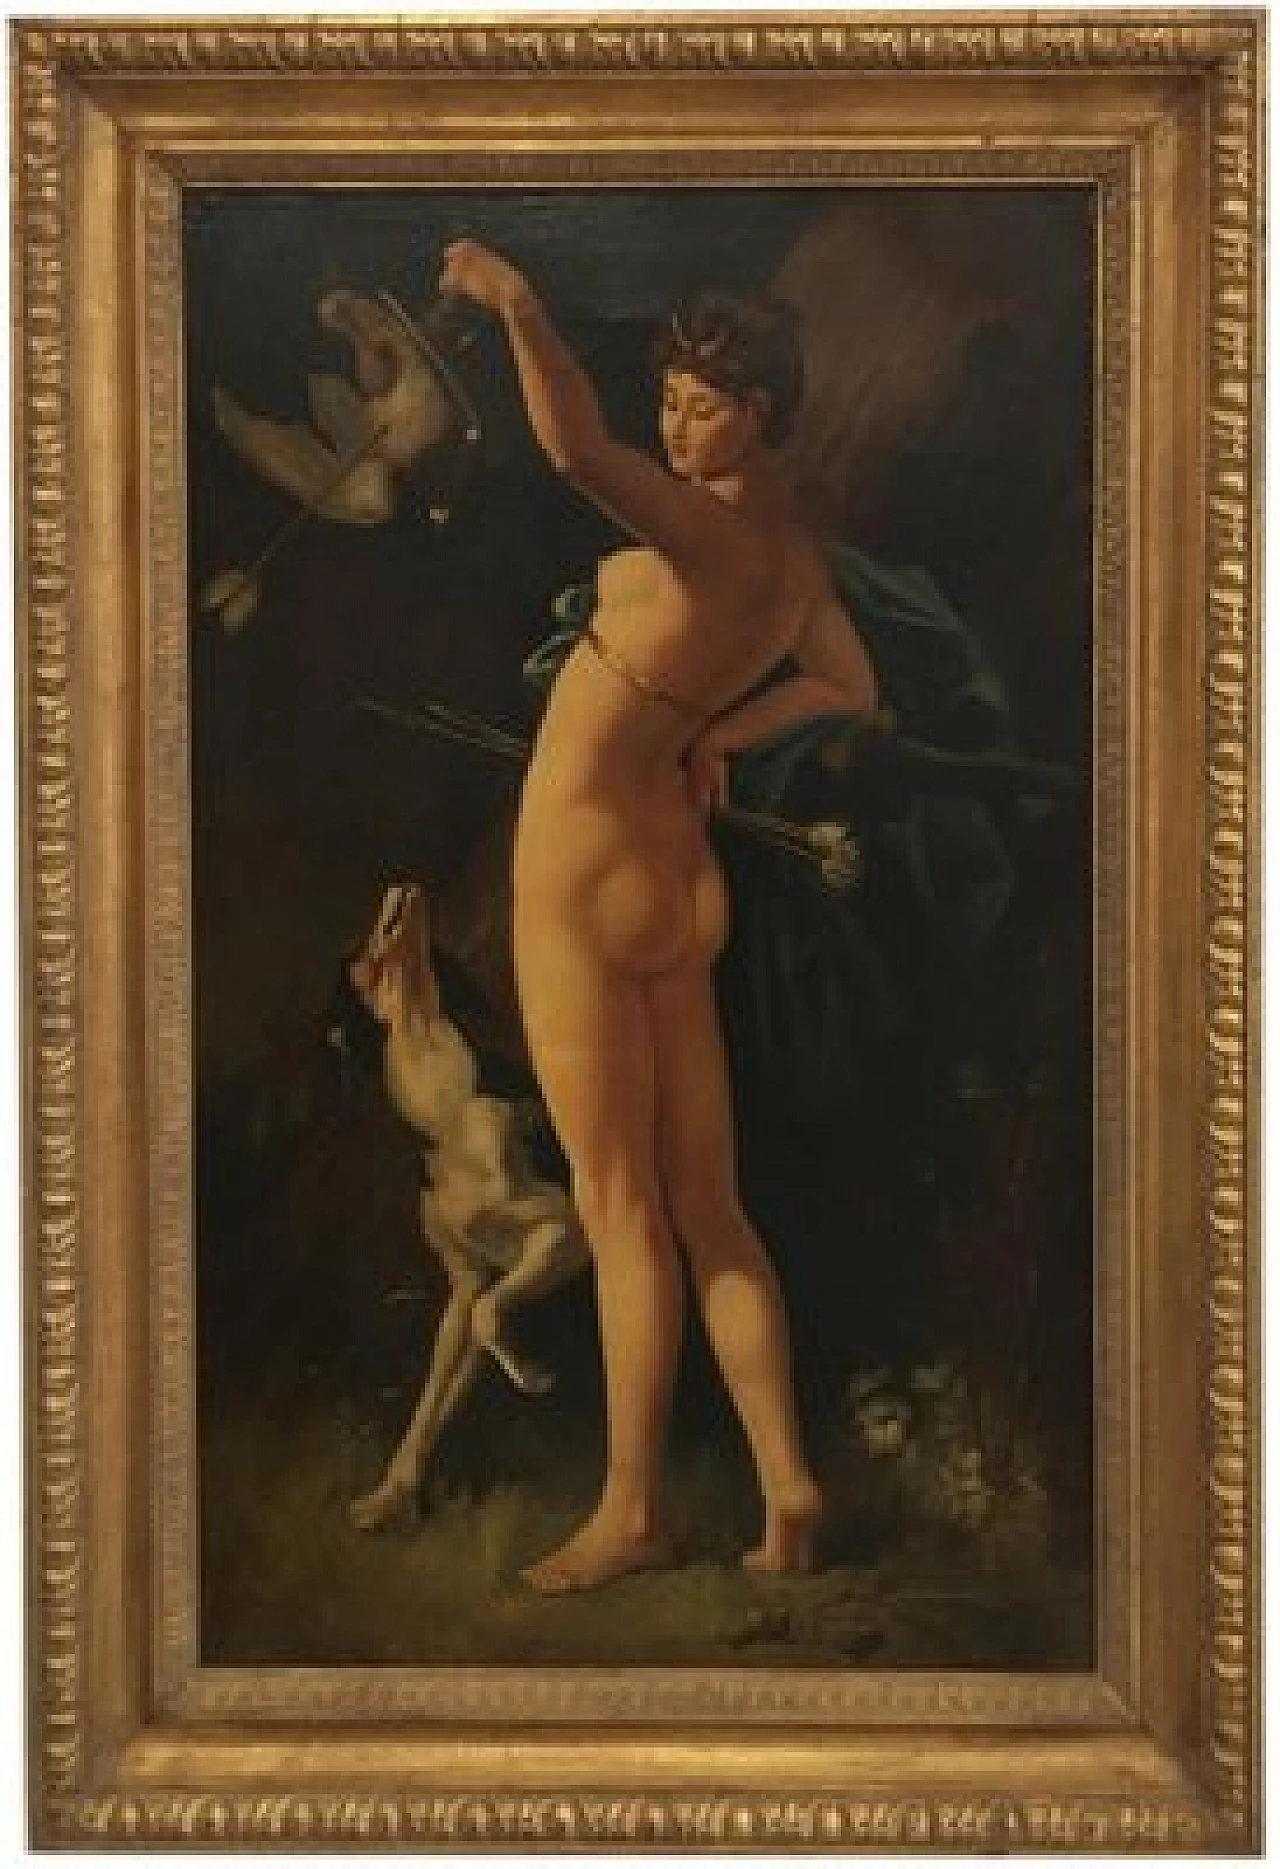 Ettore Frattini, Diana the Huntress, oil on canvas, 2002 1